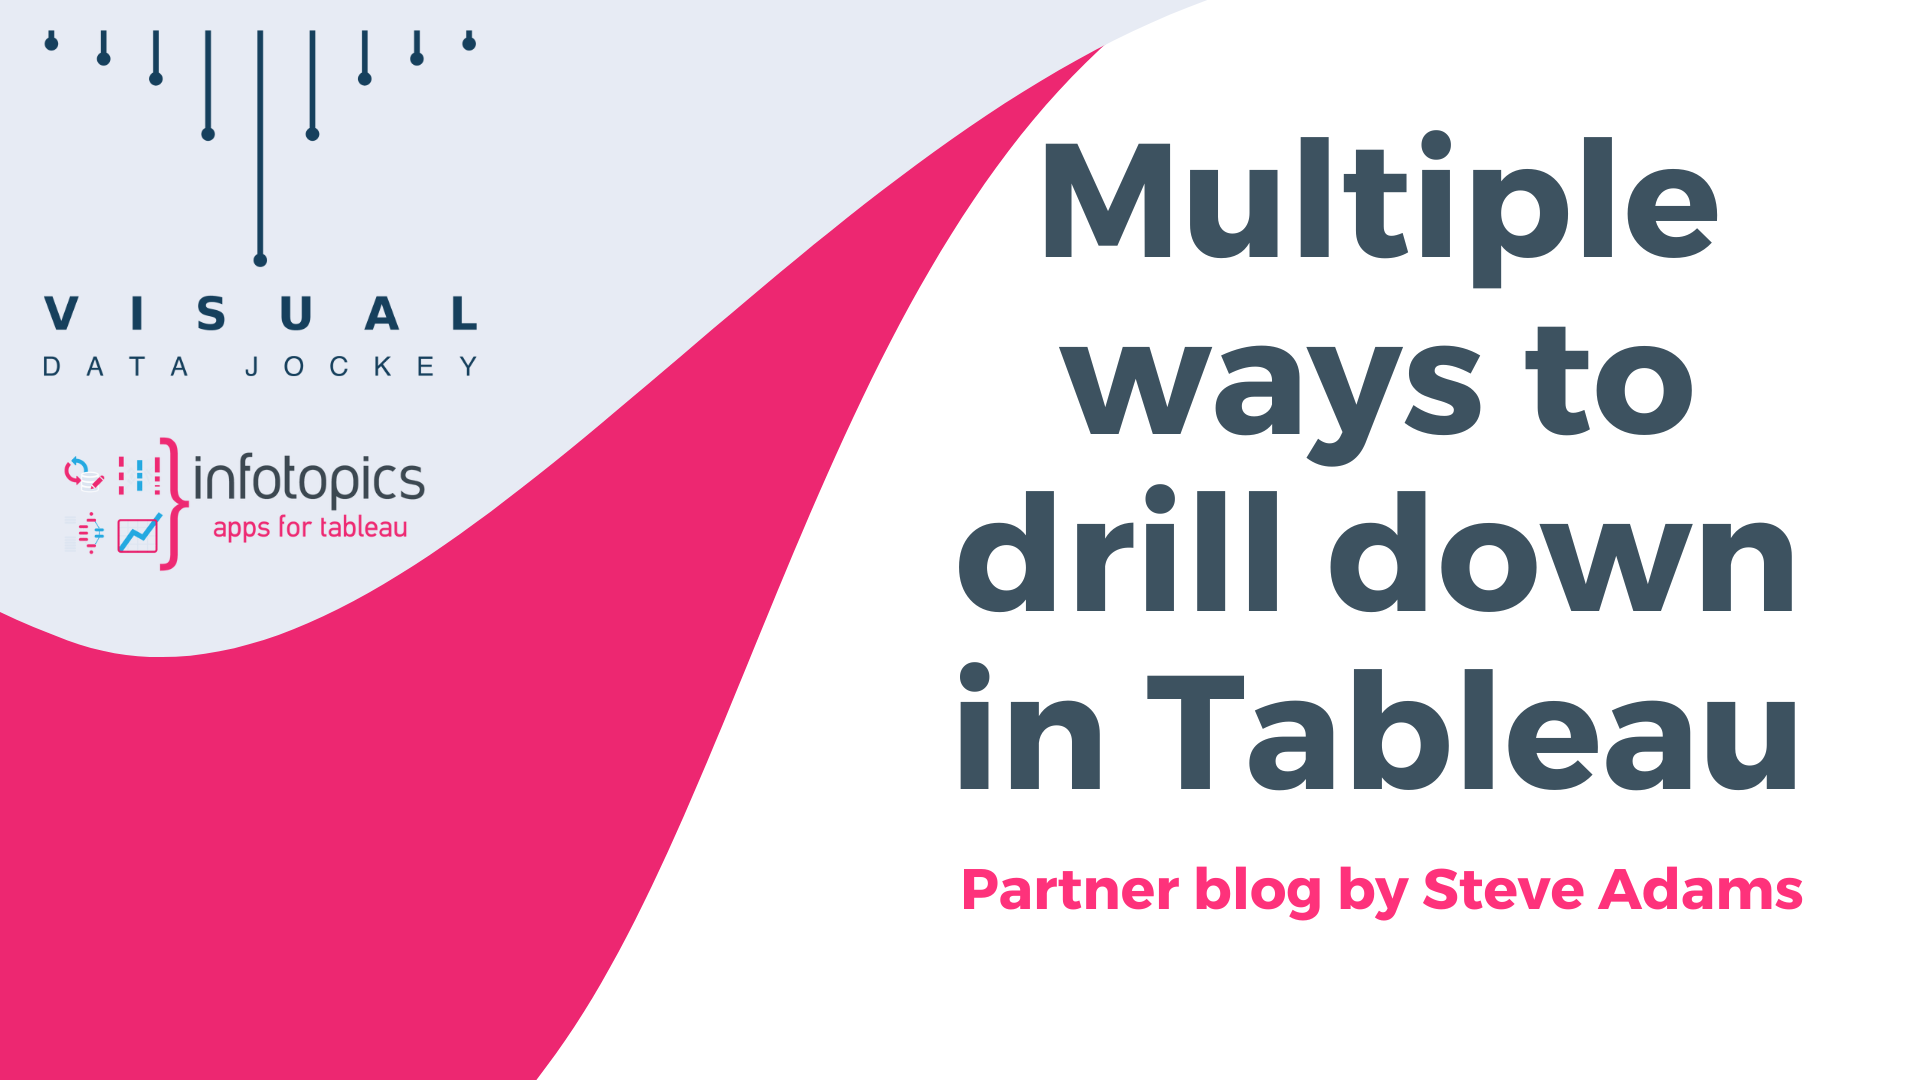 Multiple Ways to Drill Down in Tableau blog by Steve Adams, a Tableau coach